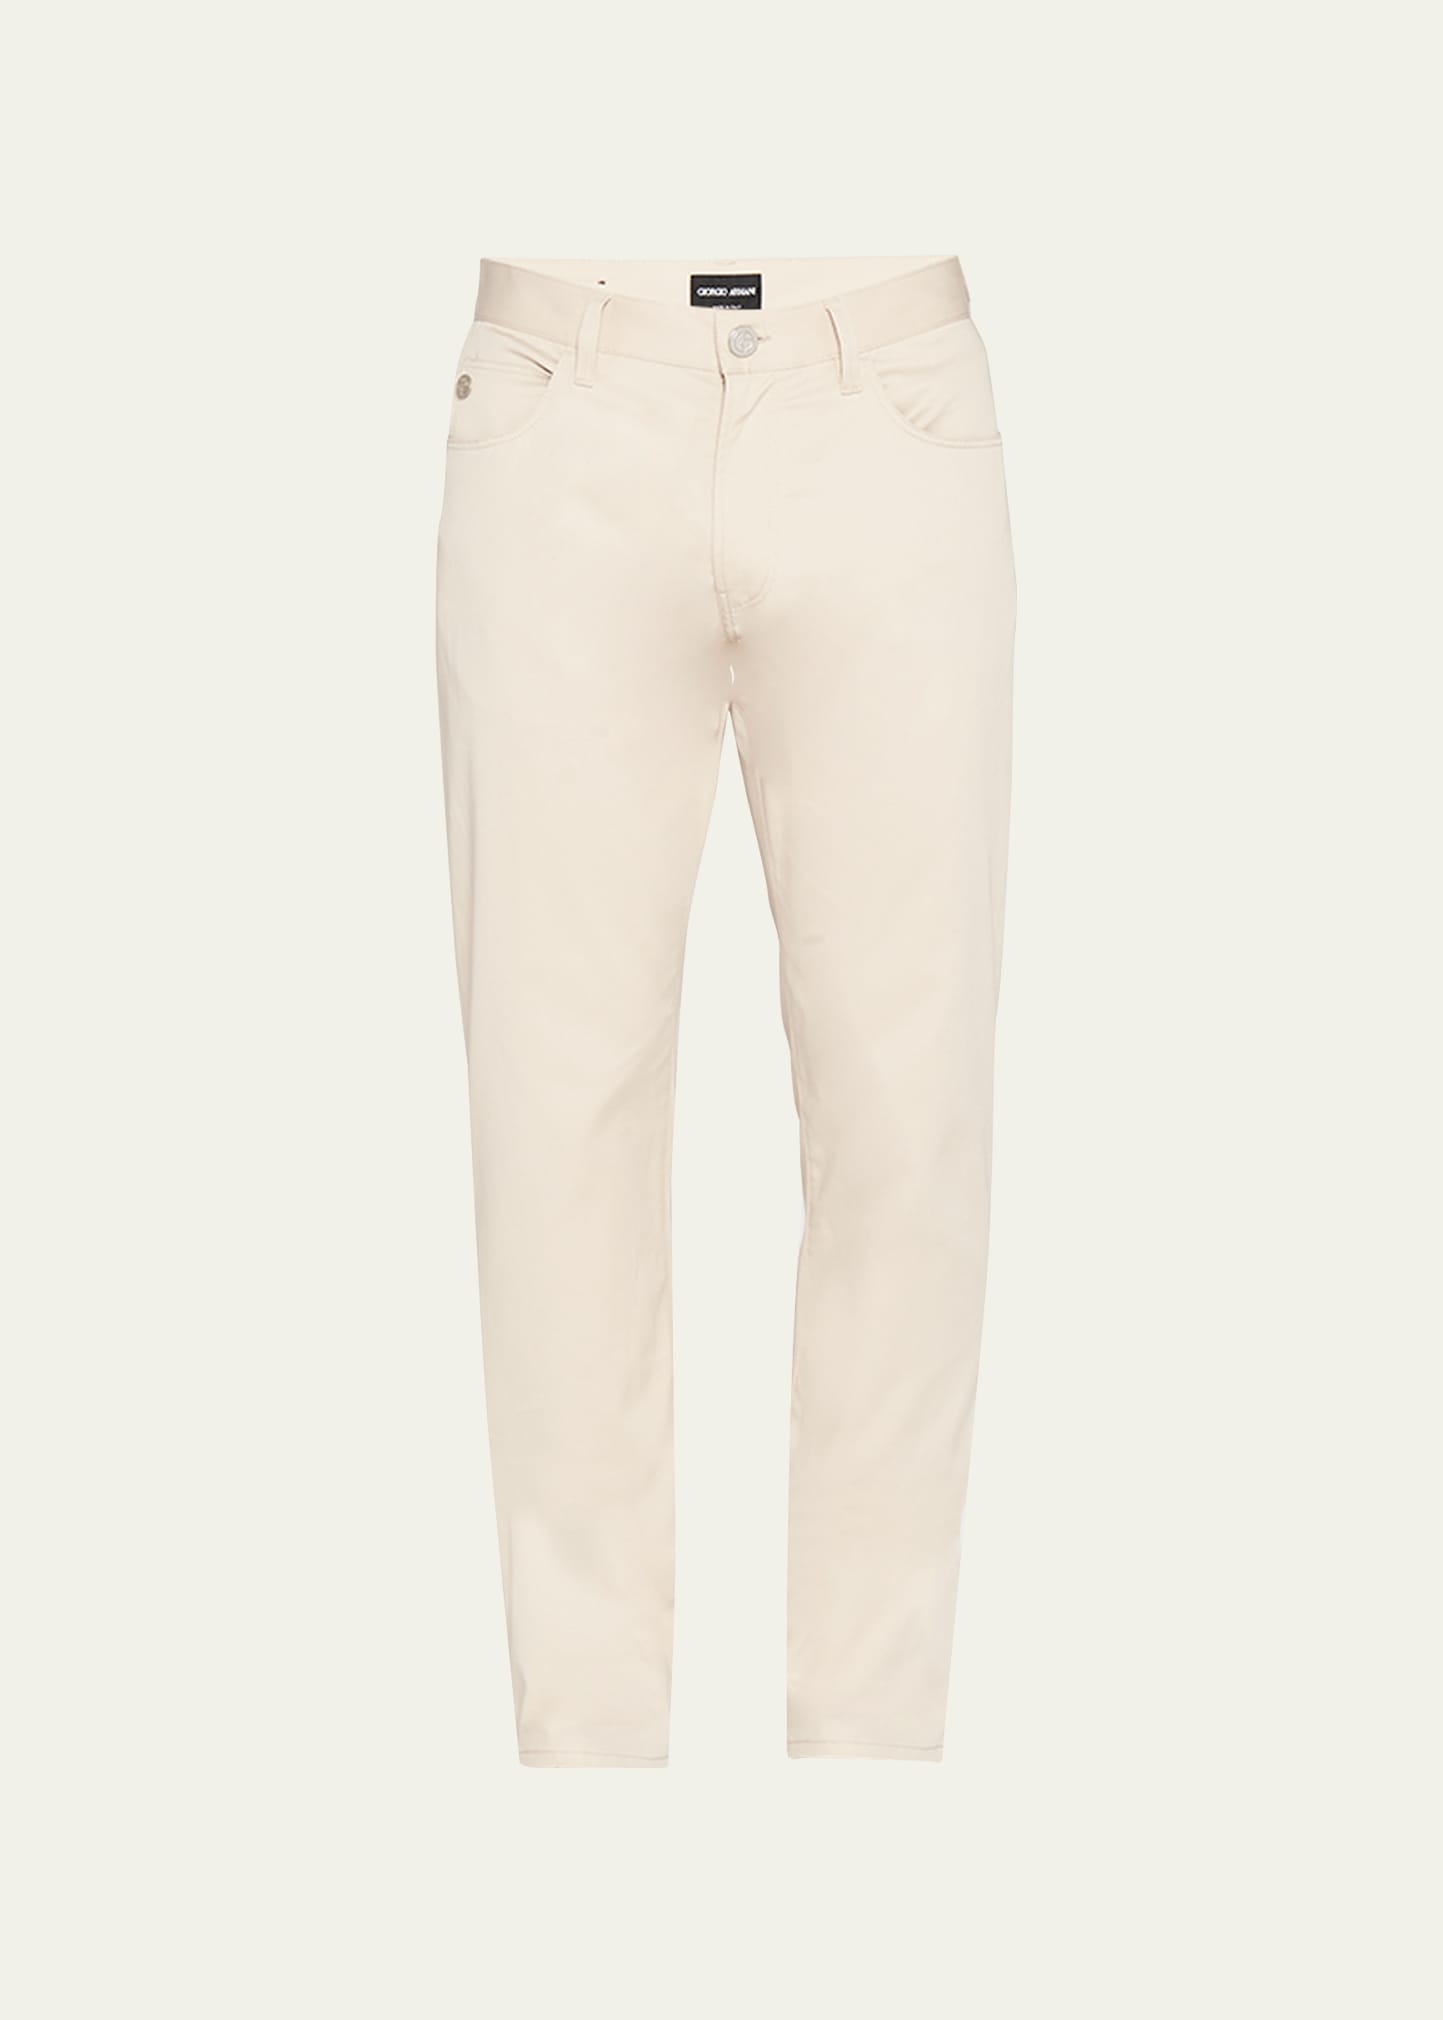 Giorgio Armani Men's Stretch 5-pocket Pants In Solid White